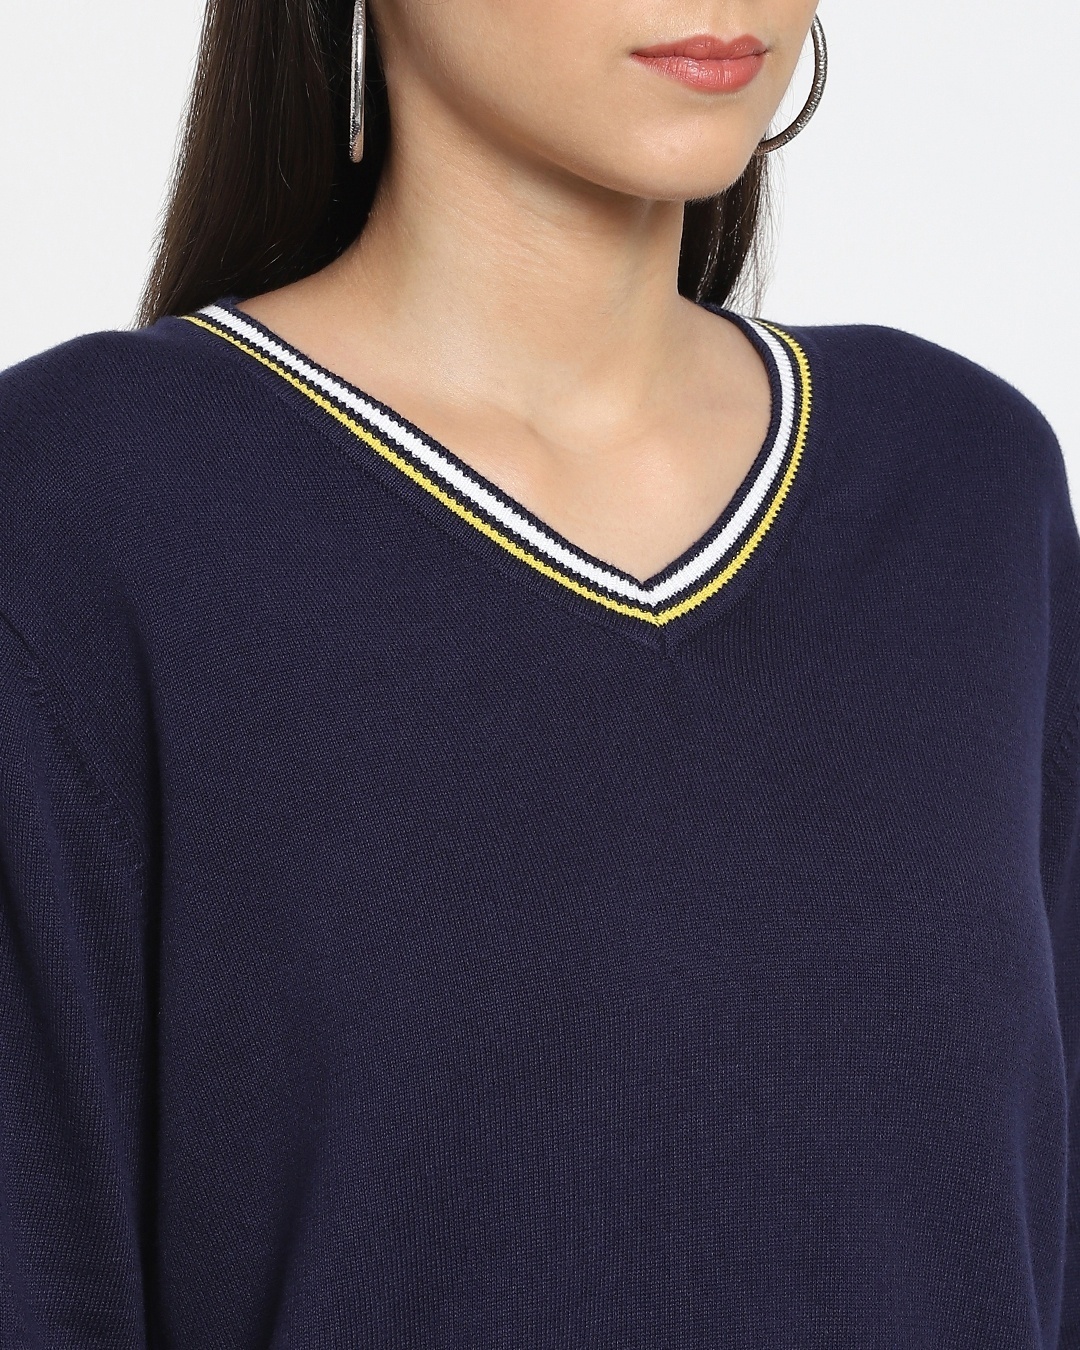 Shop Women's Flat Knit Navy Sweater